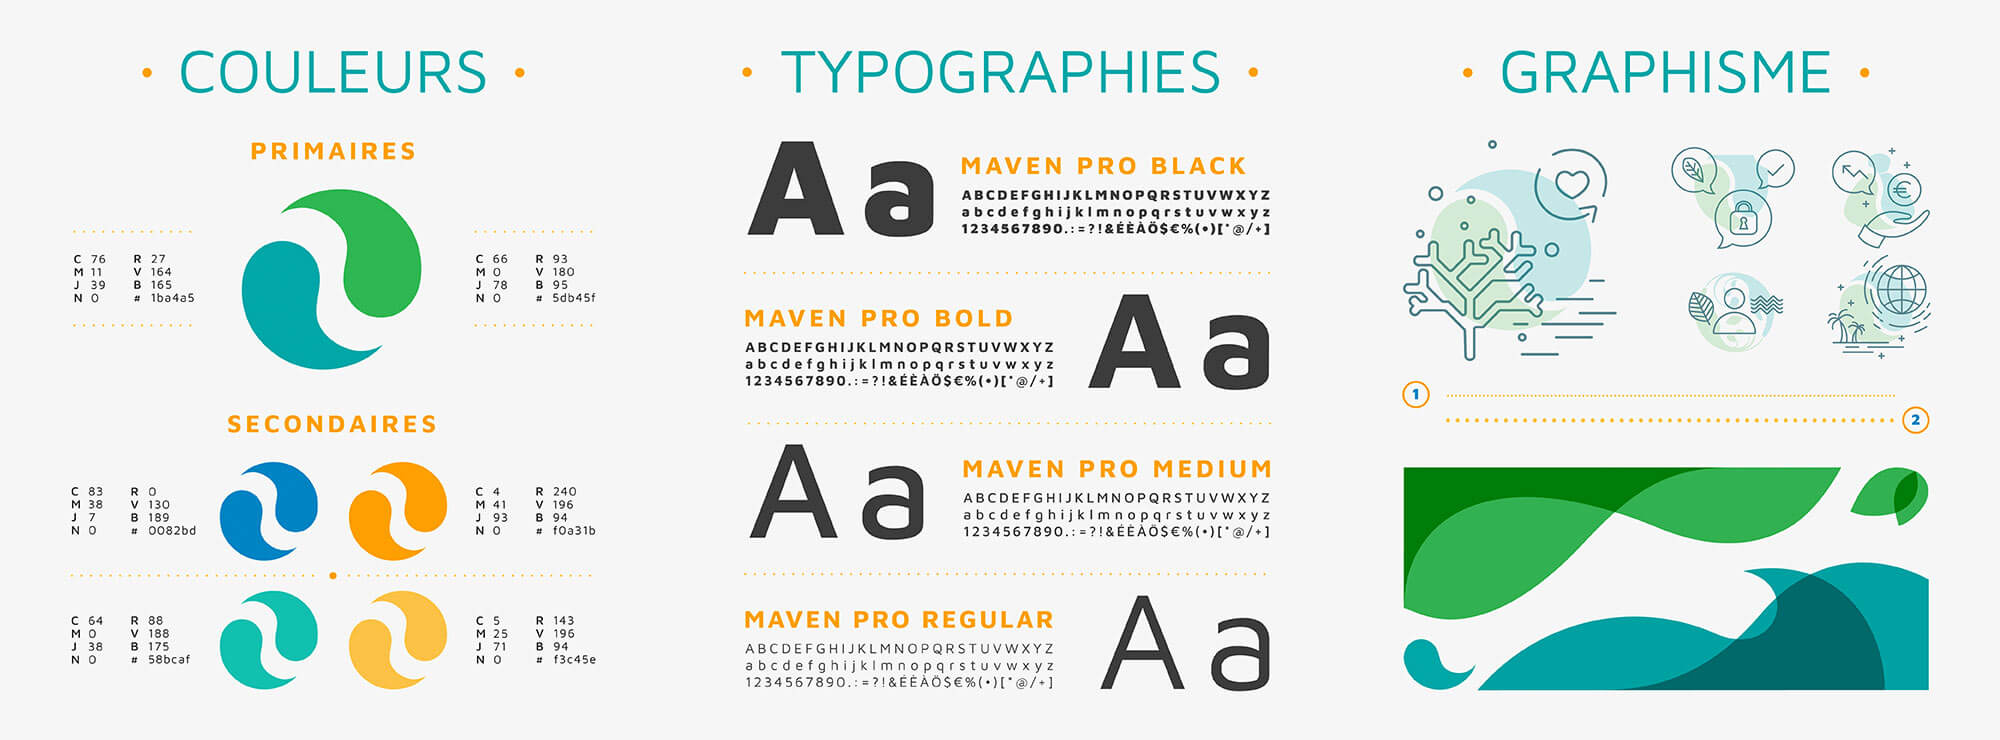 02 kiwa travelfactory pacific graphic guideline typography colors.jpg